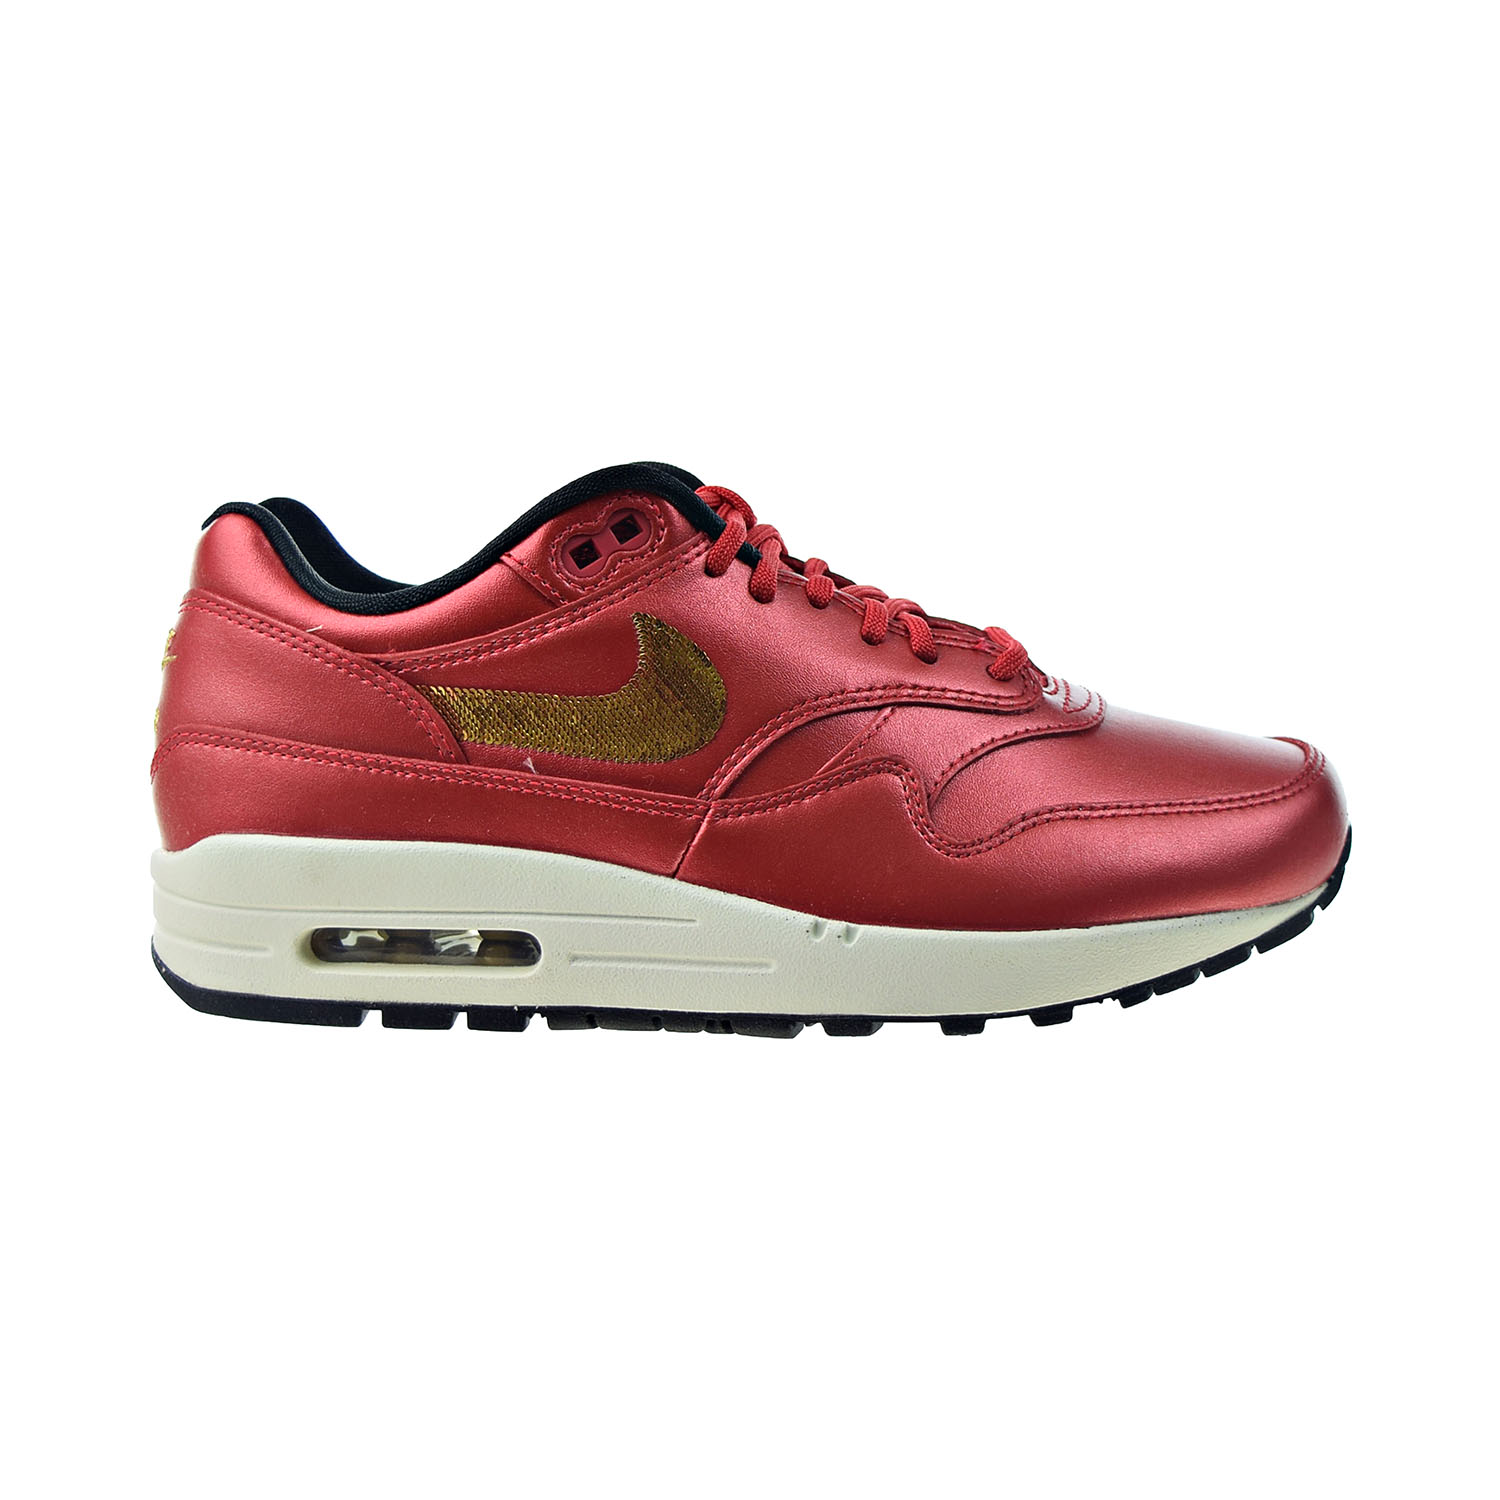 Nike Air Max 1 Women's Shoes University Red-Metallic Gold ct1149-600 - image 1 of 6